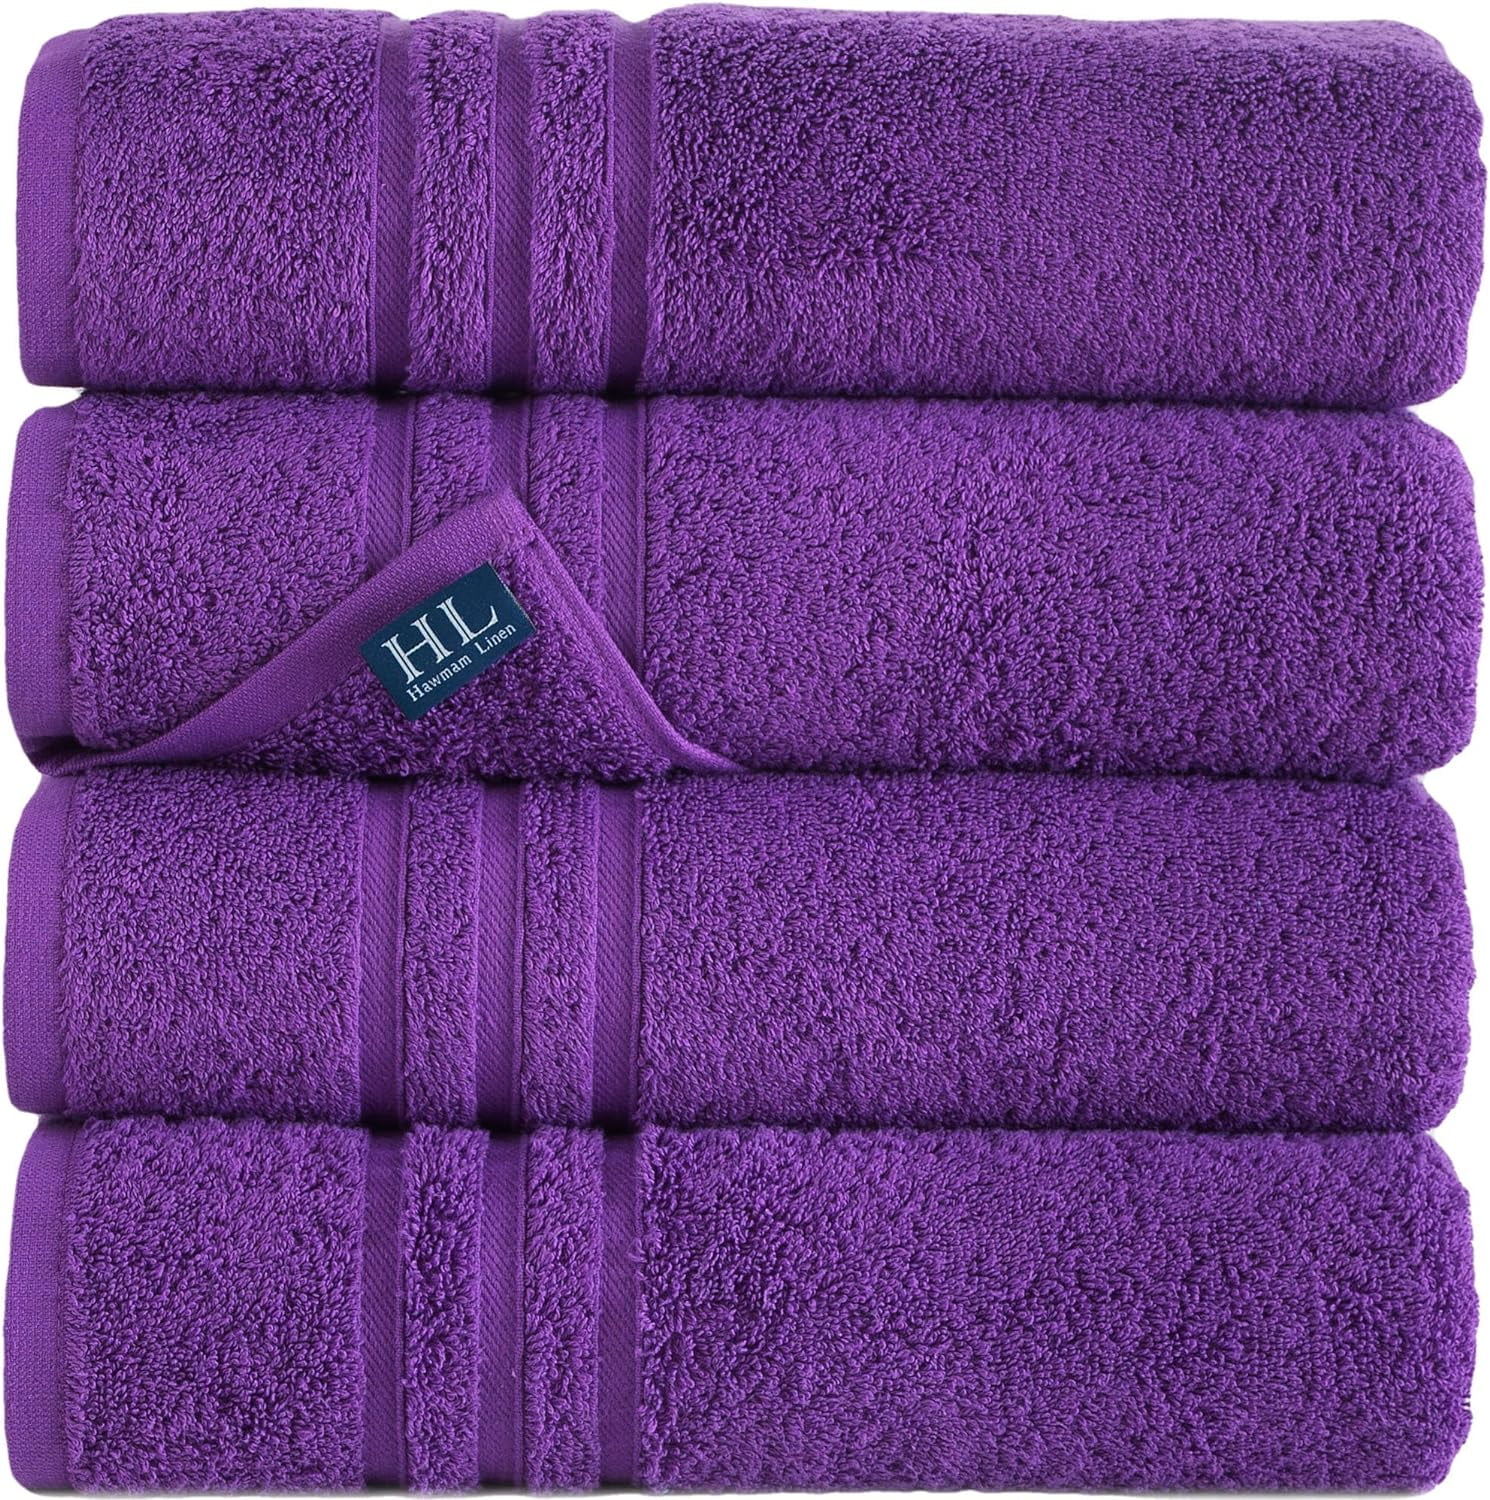 Peshkul Premium Luxury Collection Turkish Bath Towels 100% Cotton 27x54 | Set of 4 Soft Bath Towels for Bathrooms | Super Absorbent | Eco-Friendly